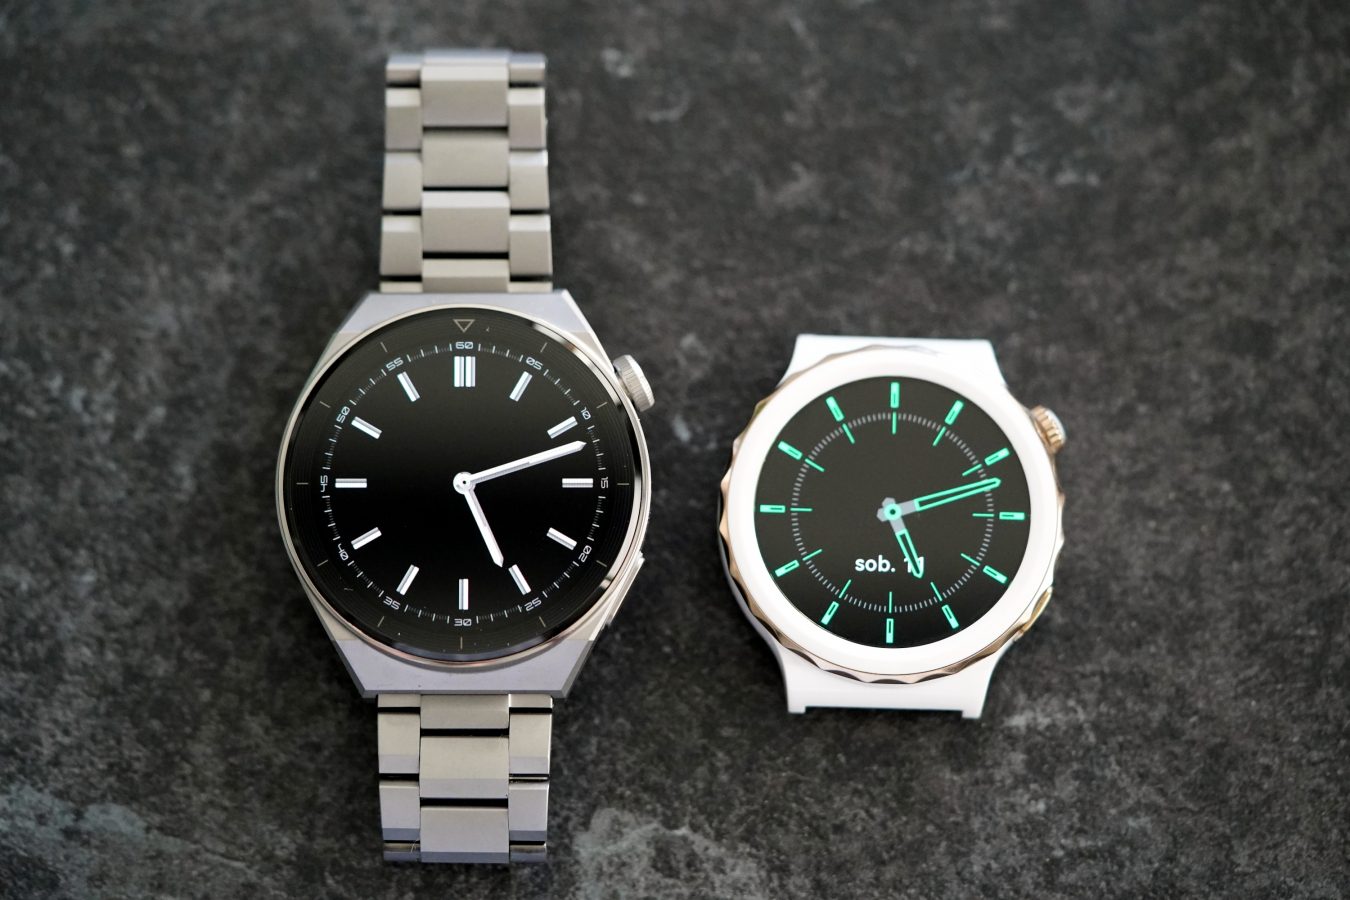 smartwatch Huawei Watch GT 3 Pro